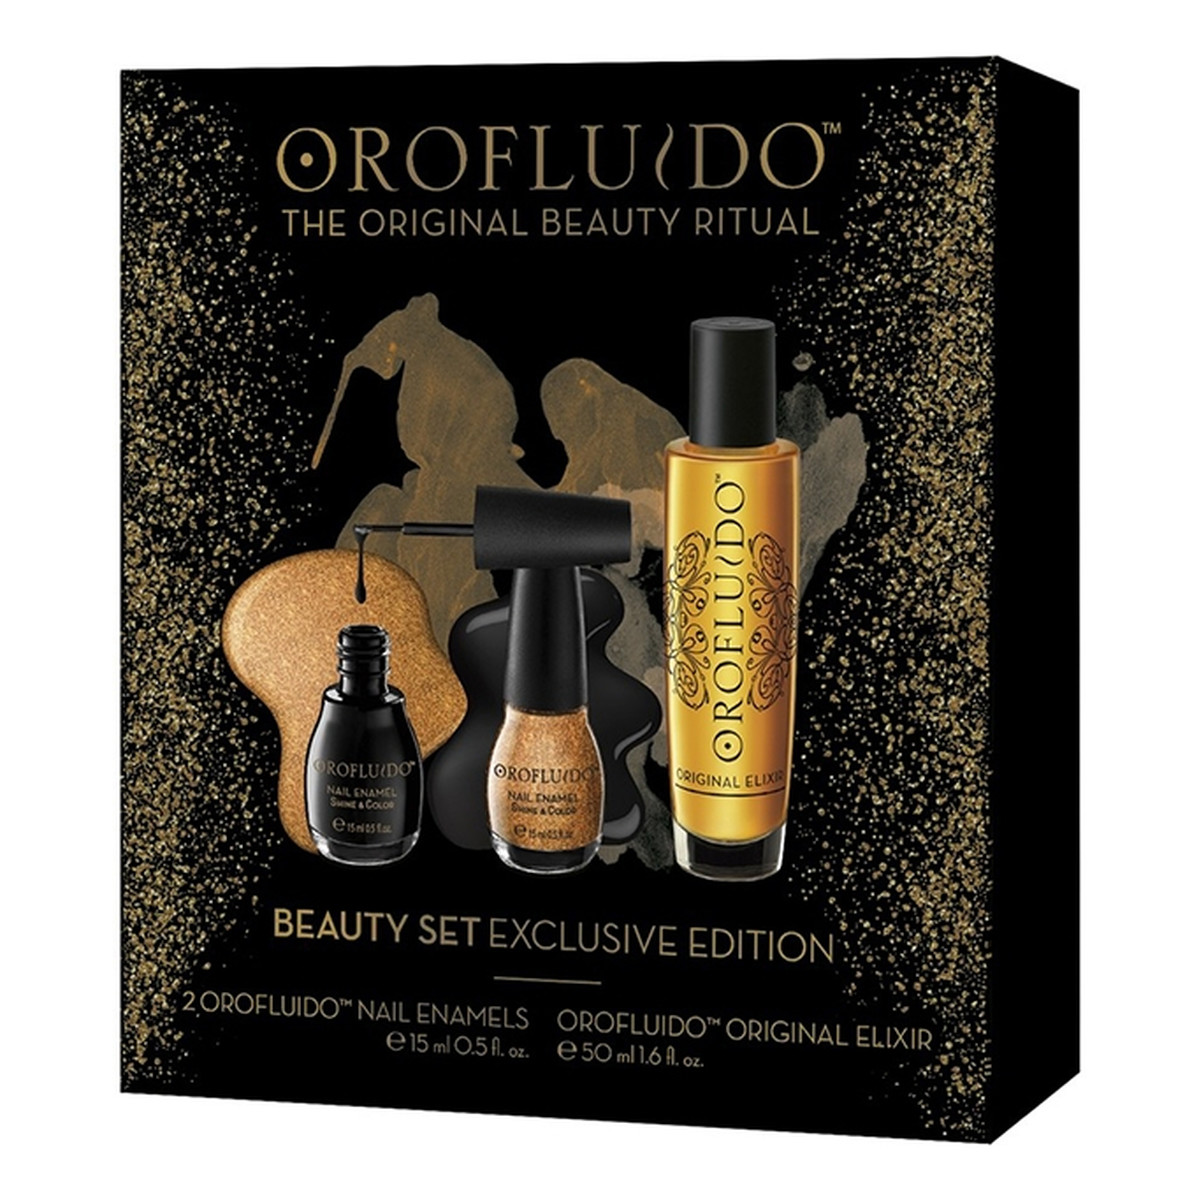 Orofluido The Original Beauty Ritual Zestaw Nail Enamel lakier do paznokci + Nail Enamel lakier do paznokci + Original Elixir olejek do włosów